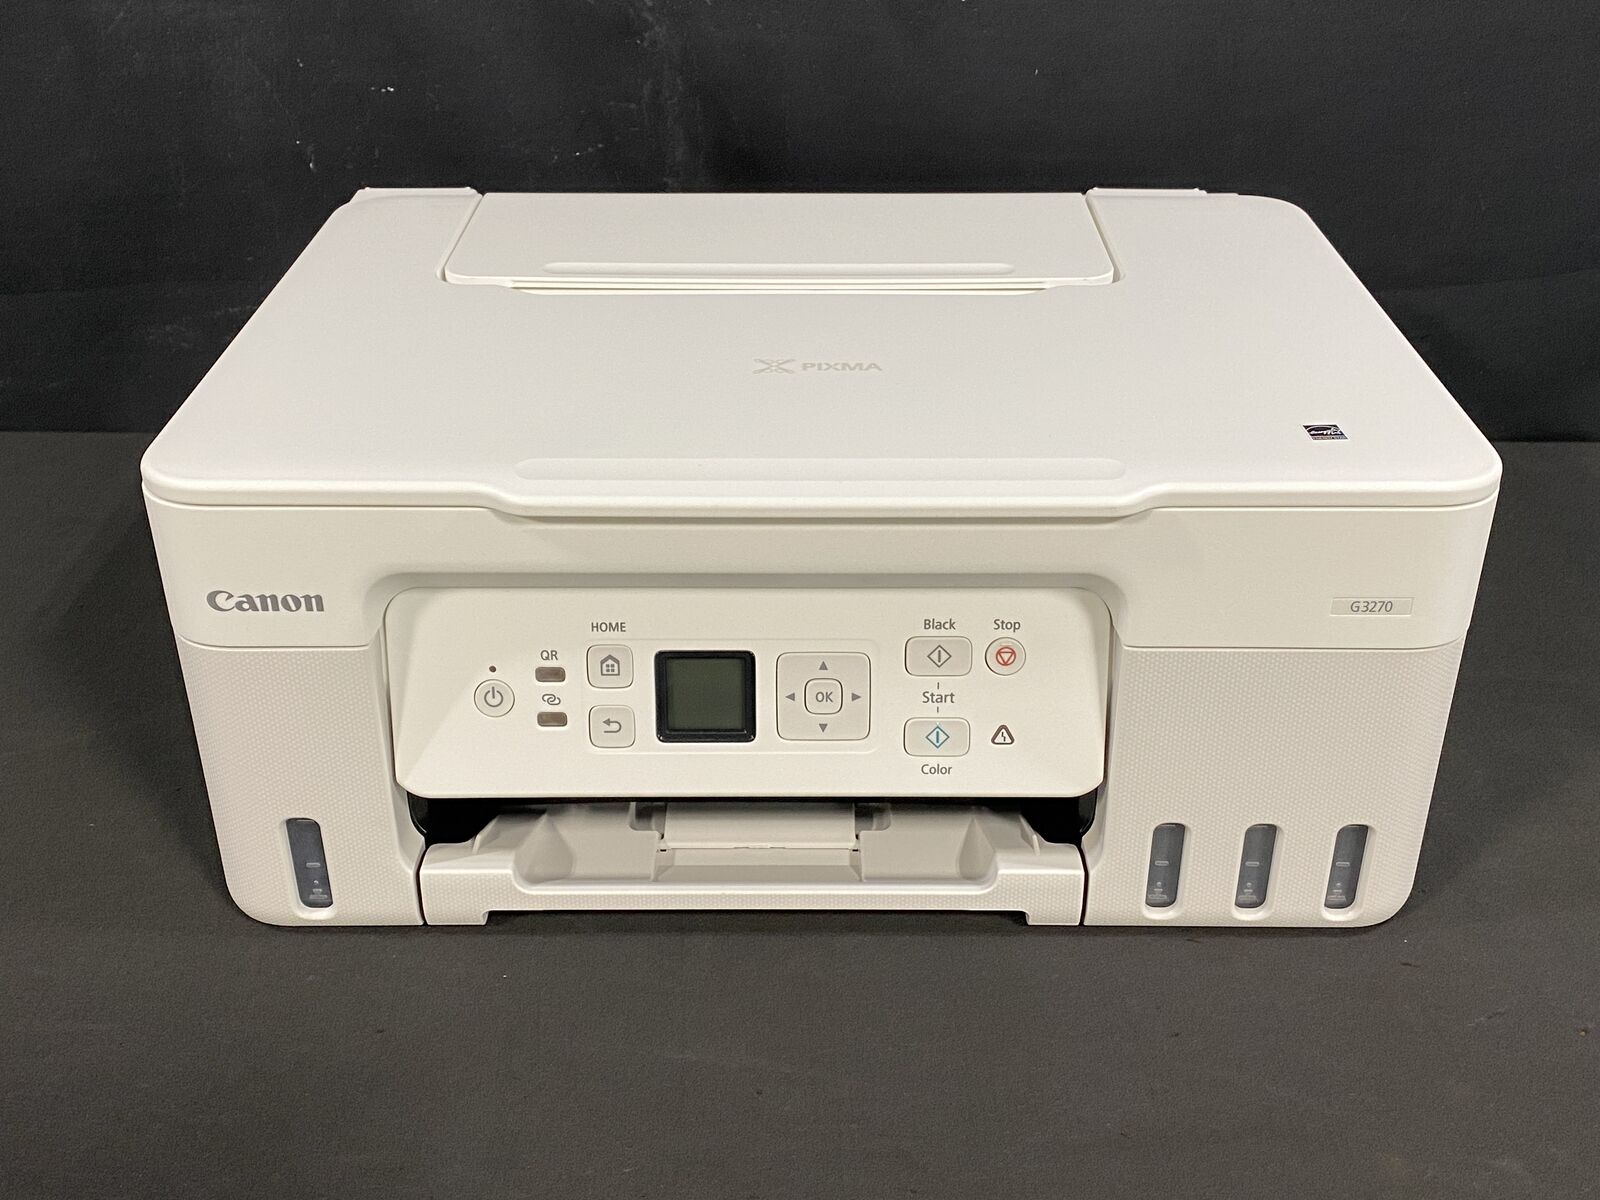 Canon PIXMA G3270 MegaTank All-in-One Wireless Inkjet Color Printer White New 